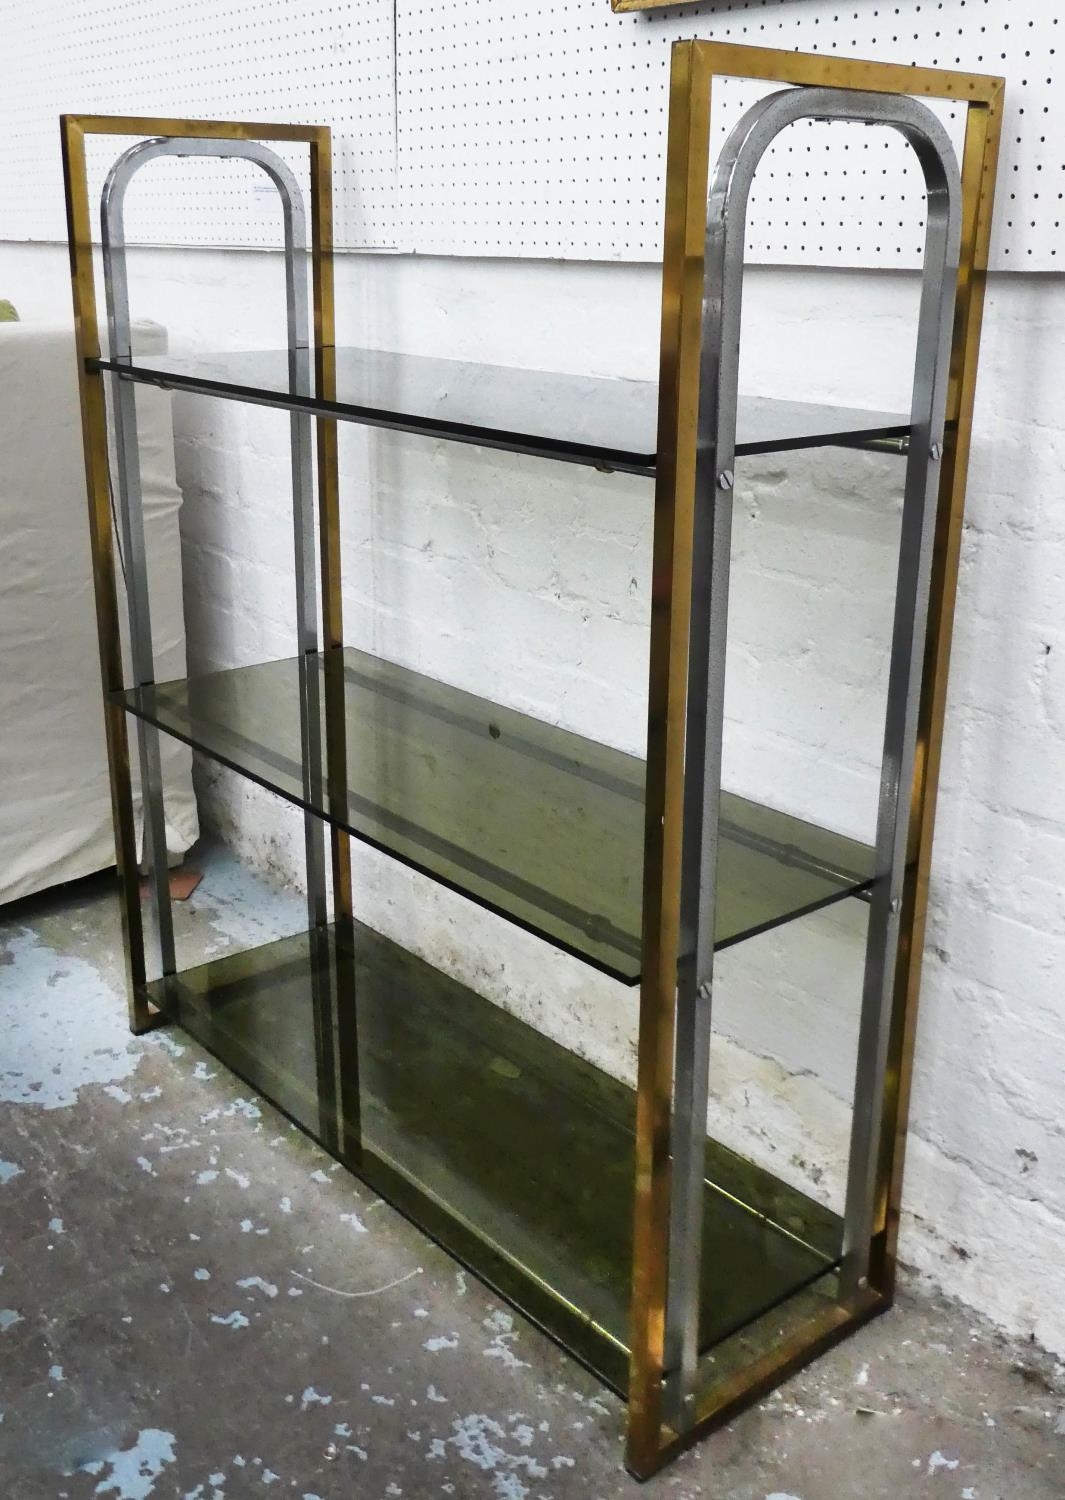 ETAGERE, 88cm x 31cm x 103cm, 1970's brass and chrome, glass shelves.